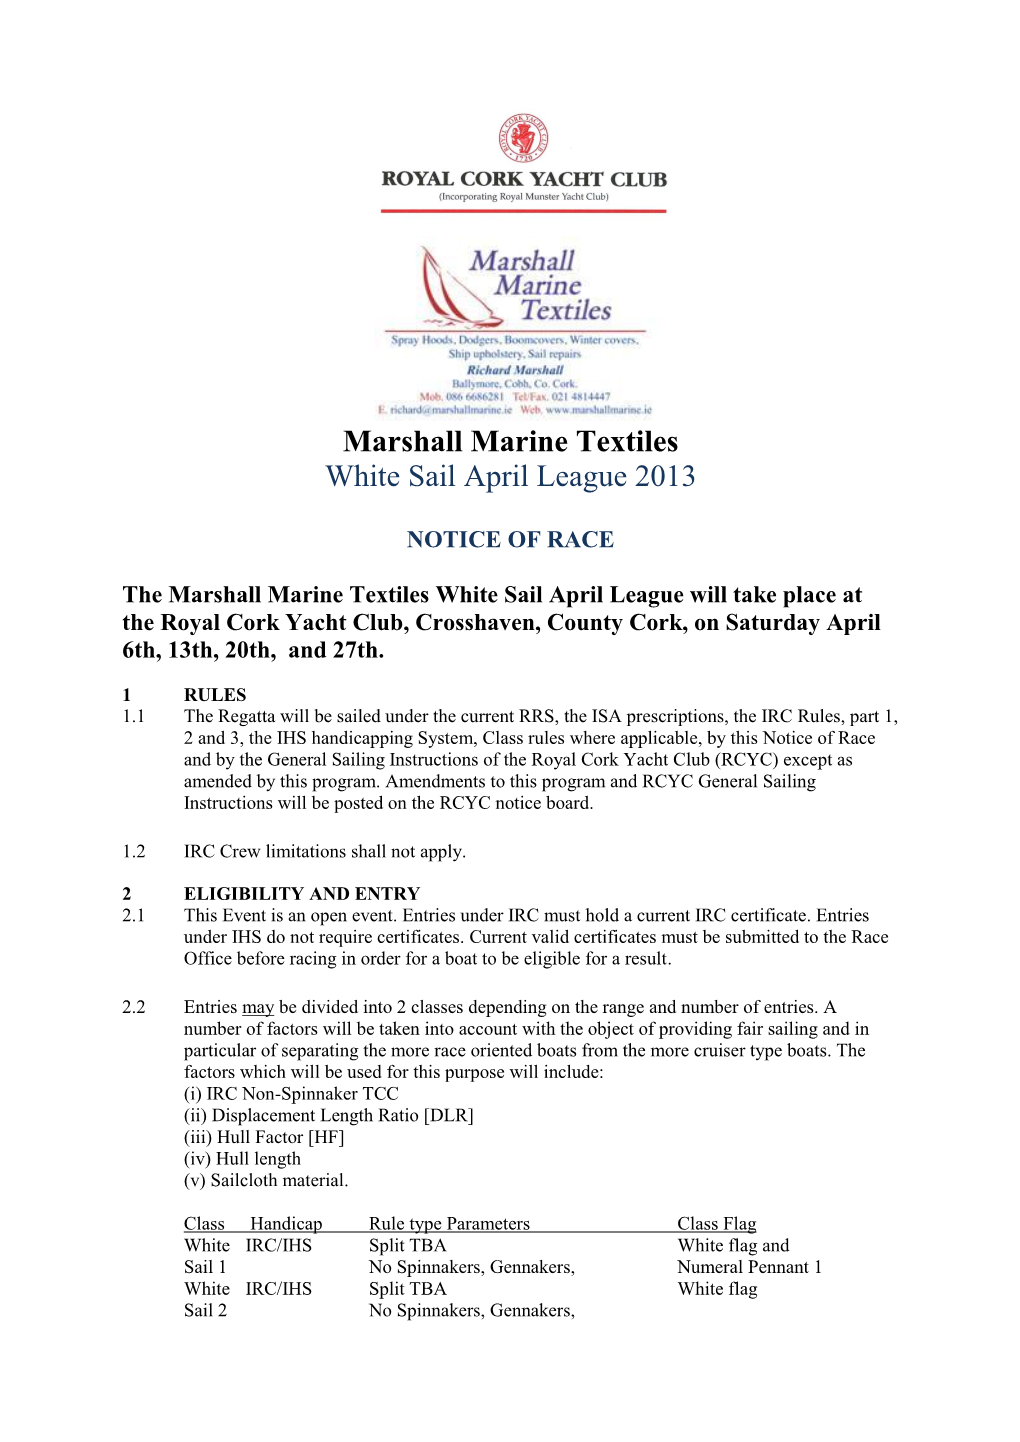 Marshall Marine Textiles White Sail April League 2013